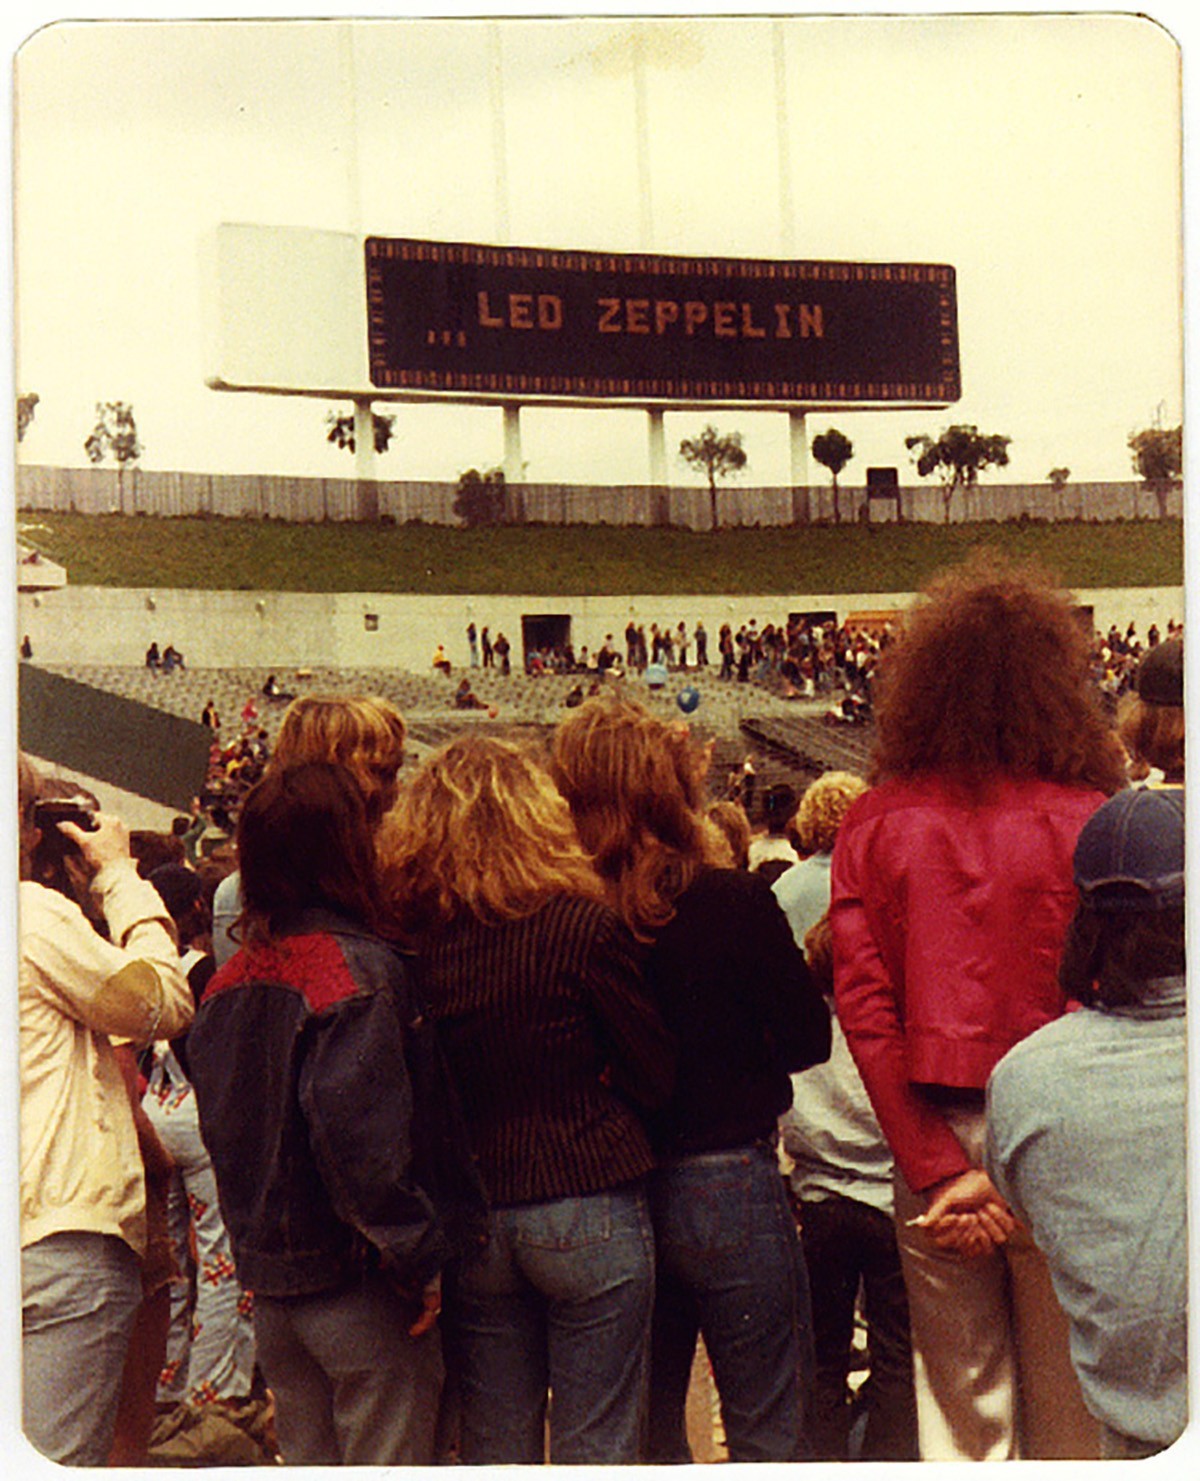 Led Zeppelin, Oakland California. Photo by Stephen Crozier July 24, 1977